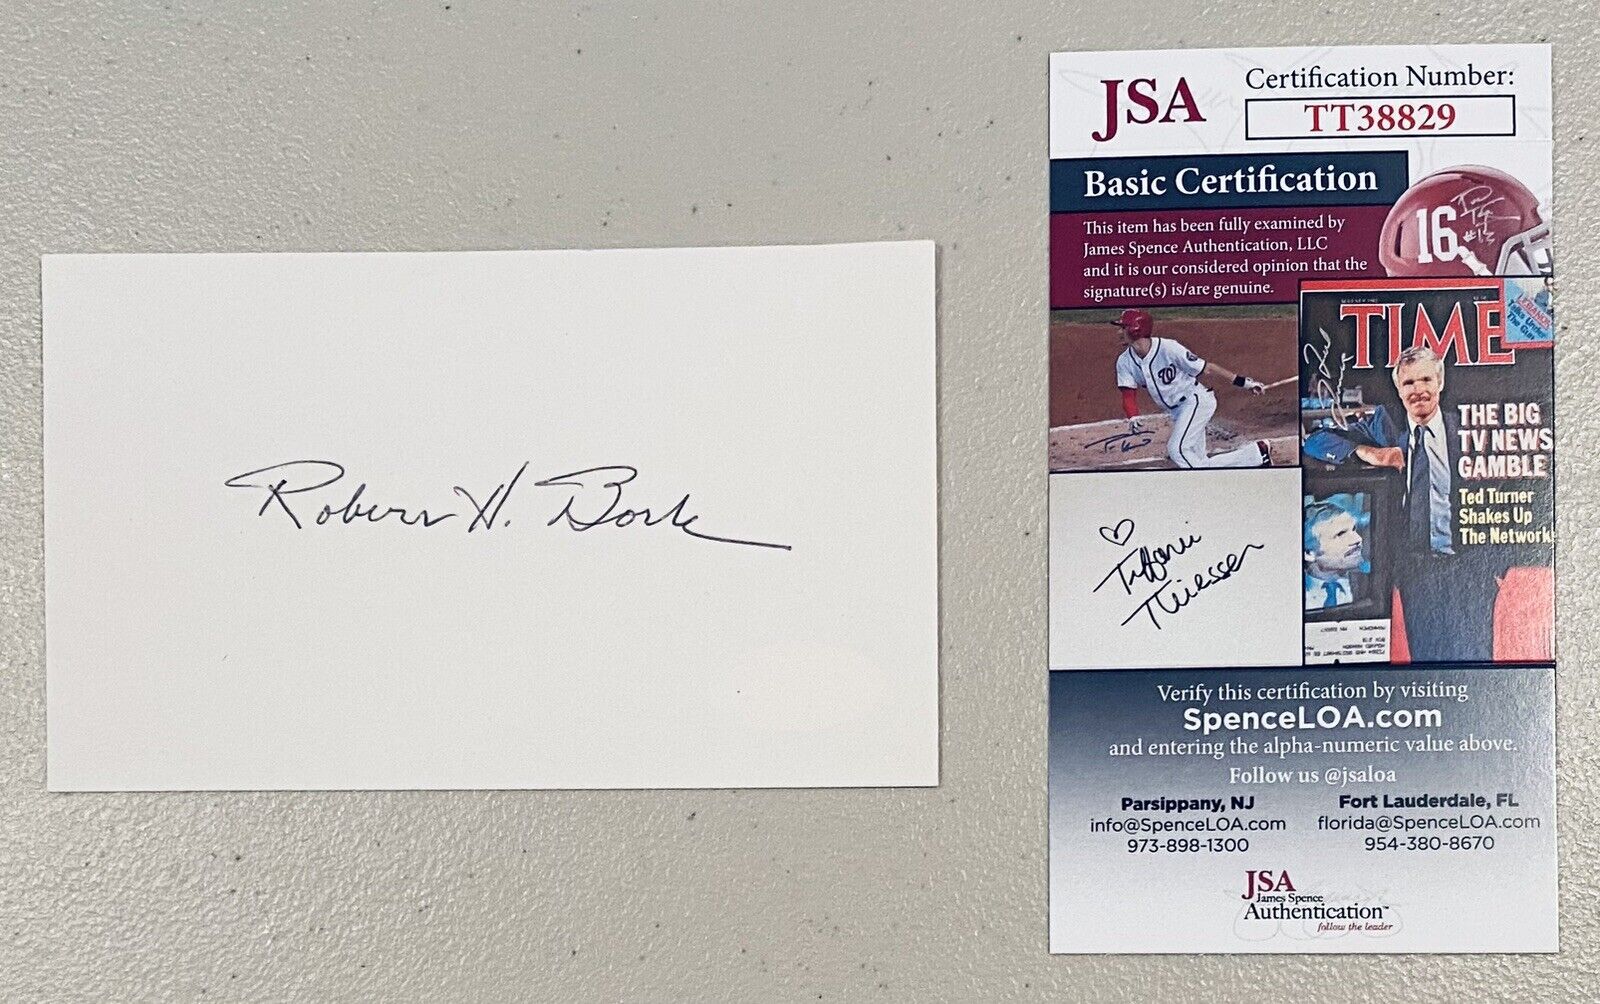 Robert Bork Signed Autographed 3x5 Card JSA Certified Supreme Court Nominee